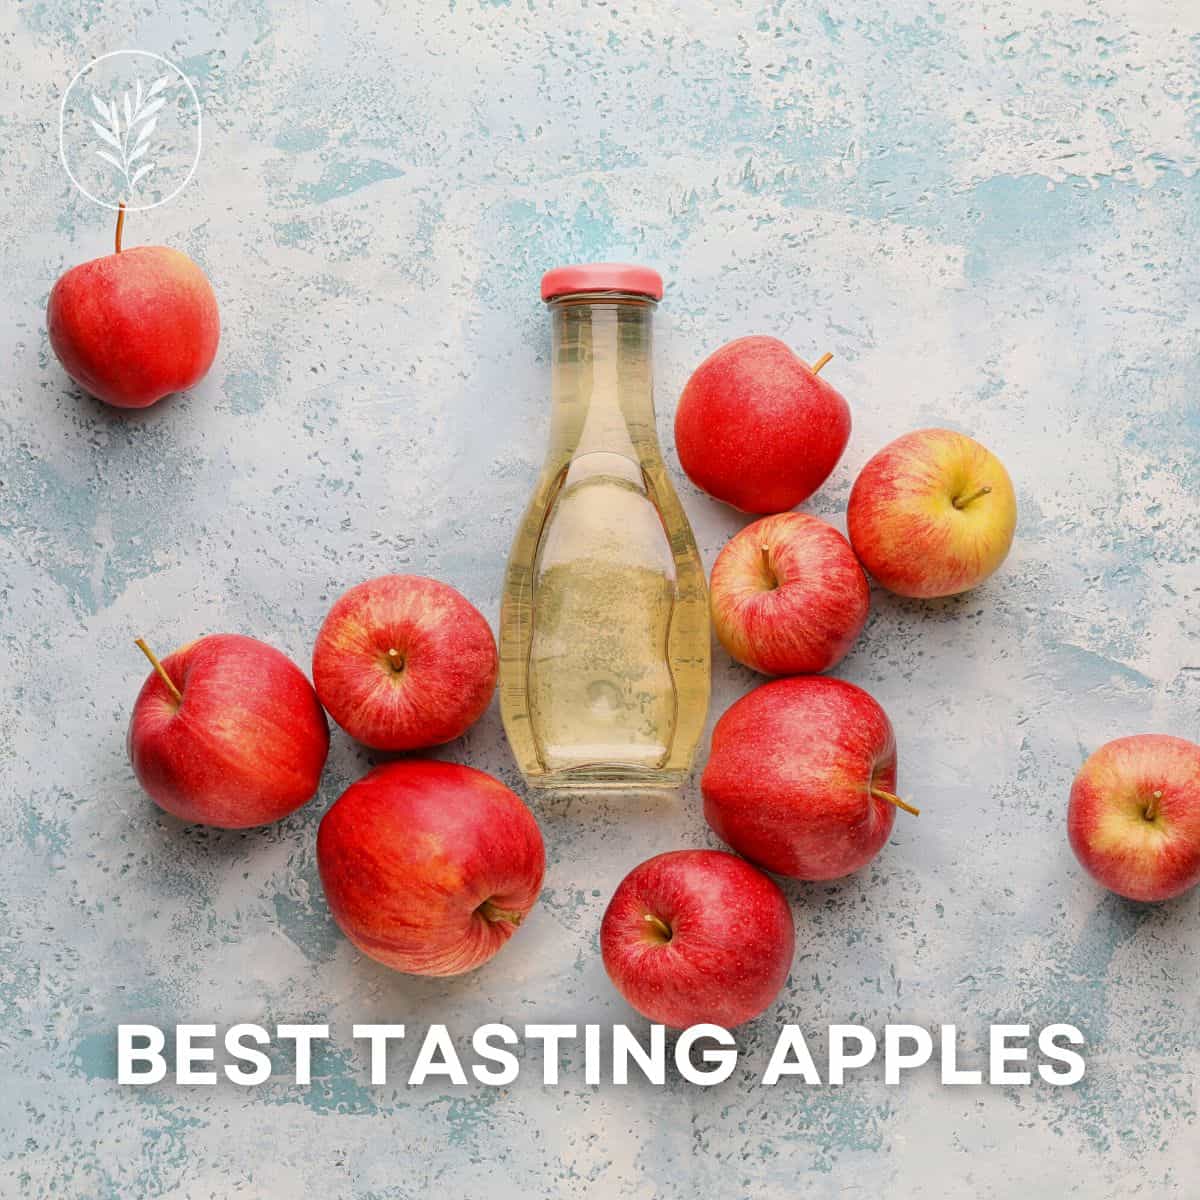 Best tasting apples via @home4theharvest